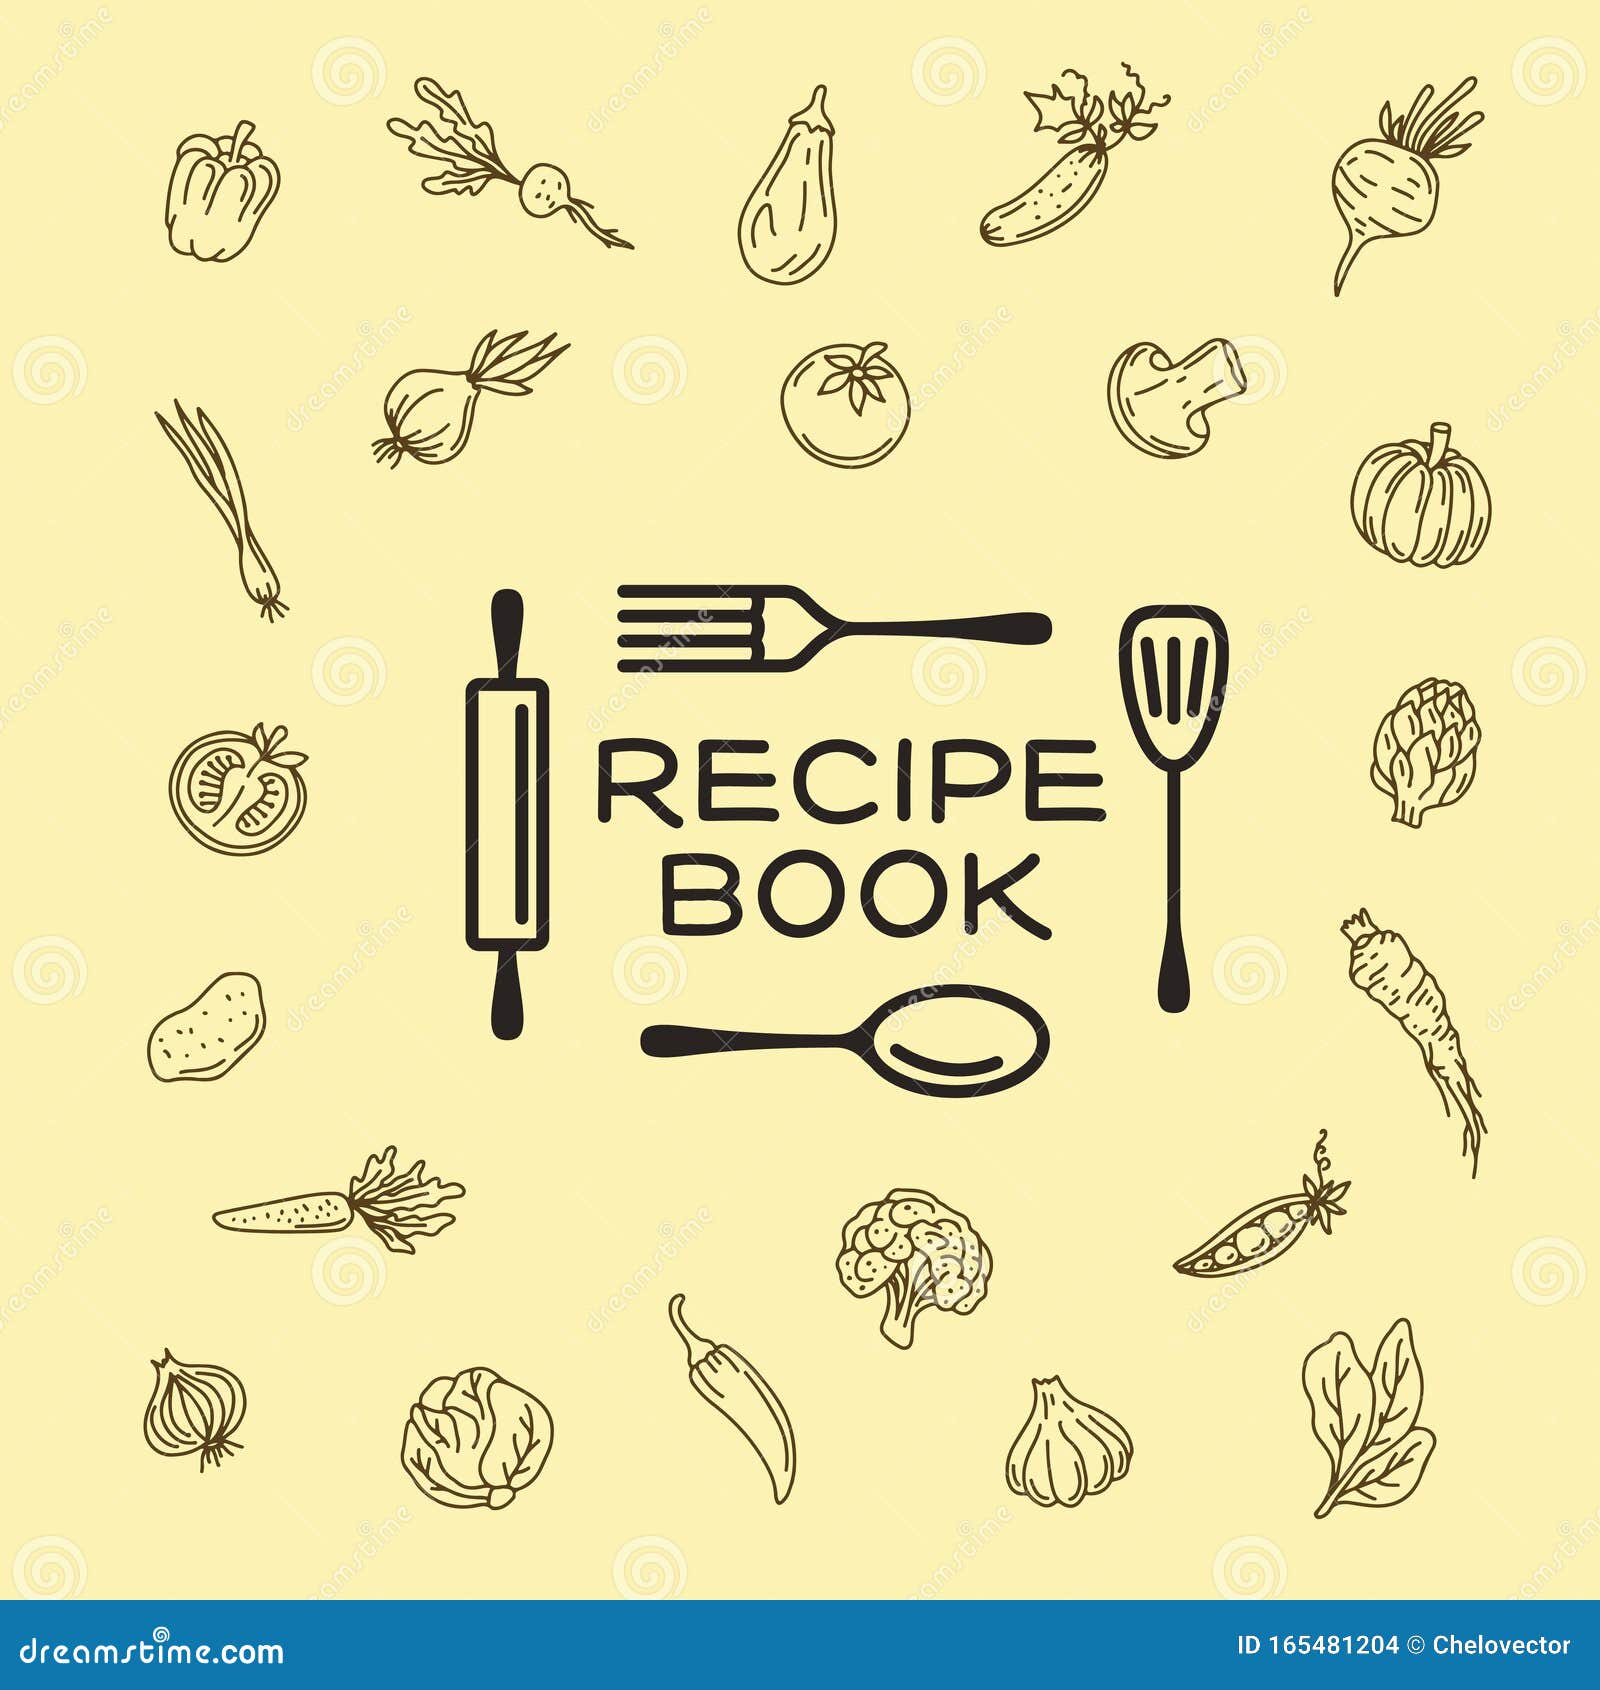 https://thumbs.dreamstime.com/z/recipe-book-hand-drawn-cover-vector-illustration-emblem-label-print-kitchen-utensil-vegetables-background-165481204.jpg